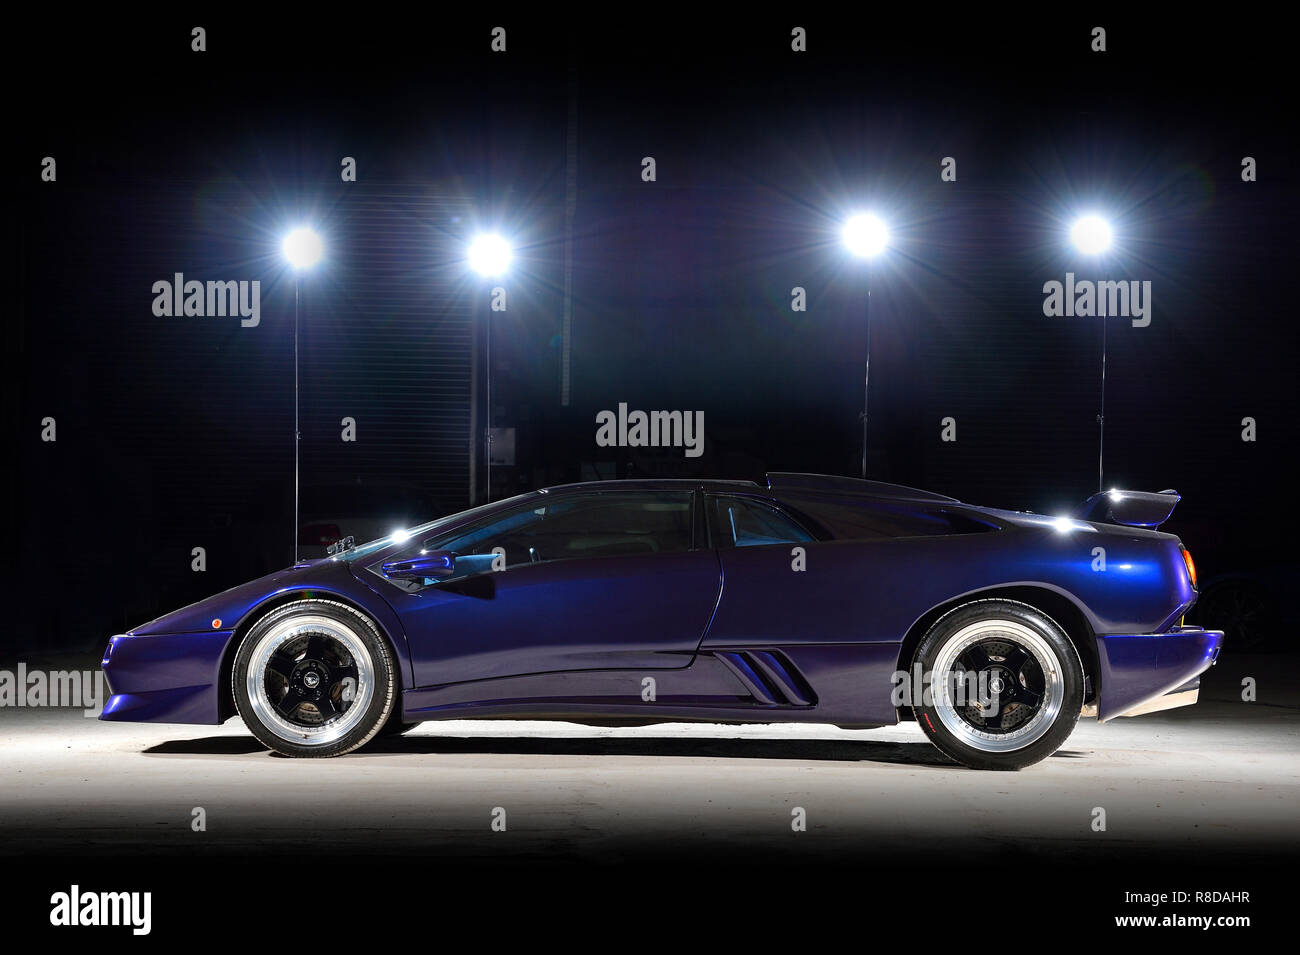 Lamborghini Diablo svr Stock Photo